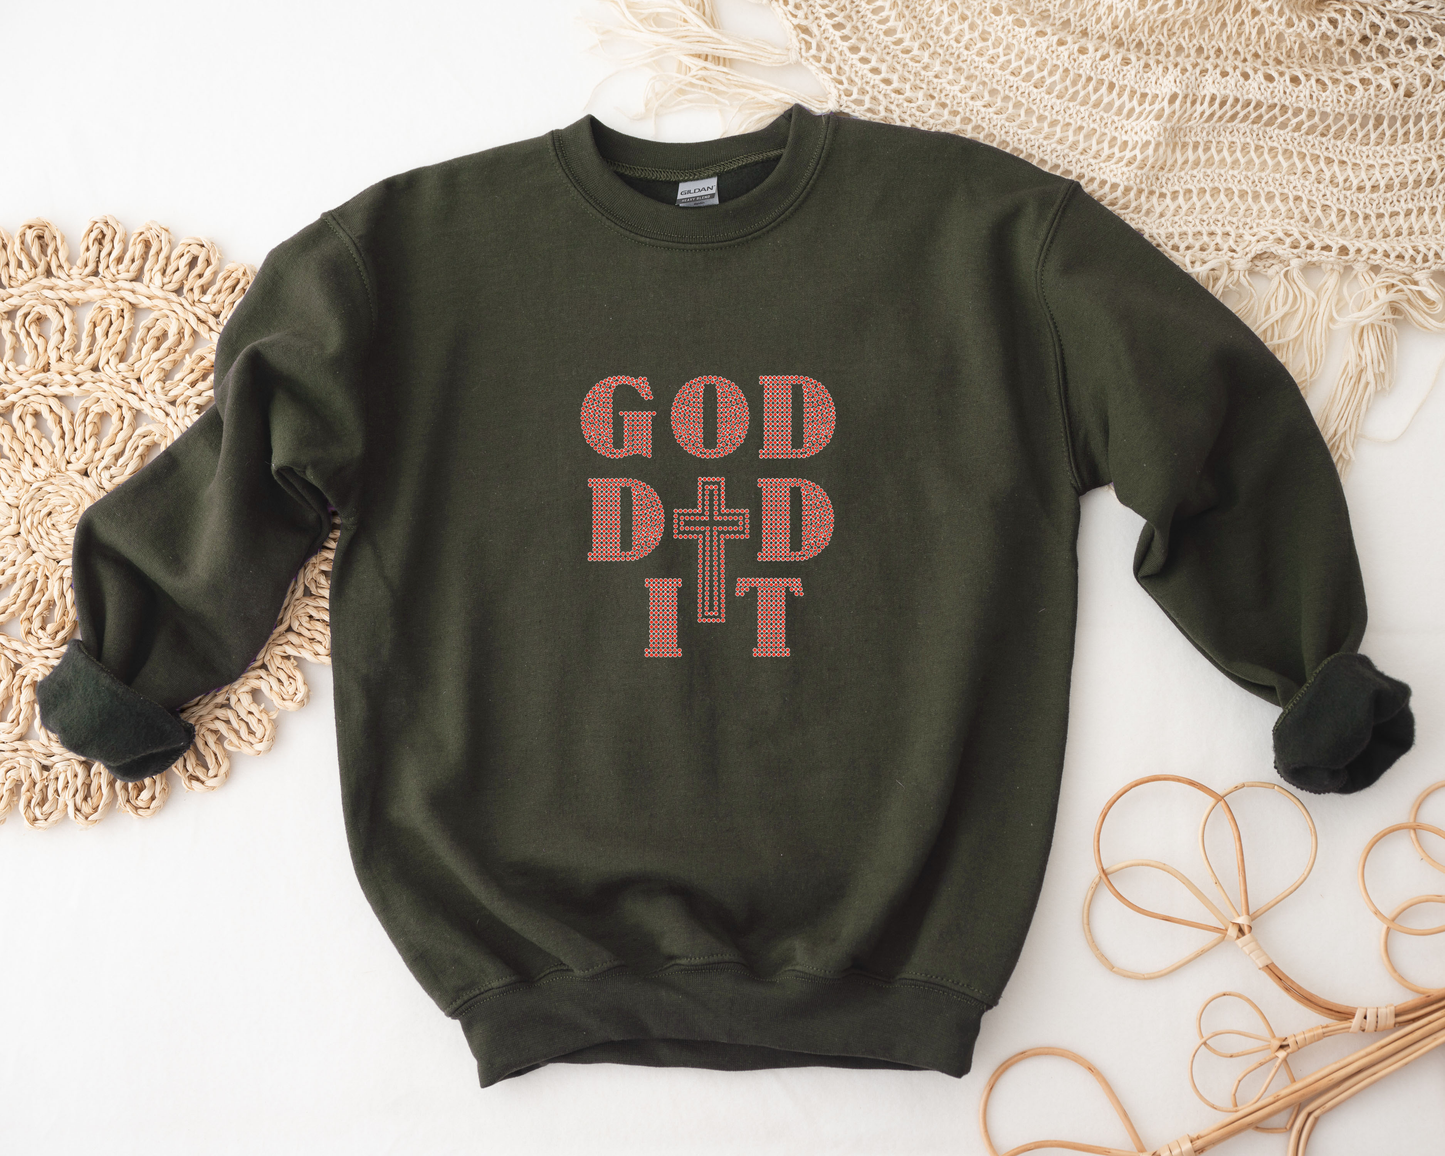 God Did it Rhinestone hoodies/sweatshirts